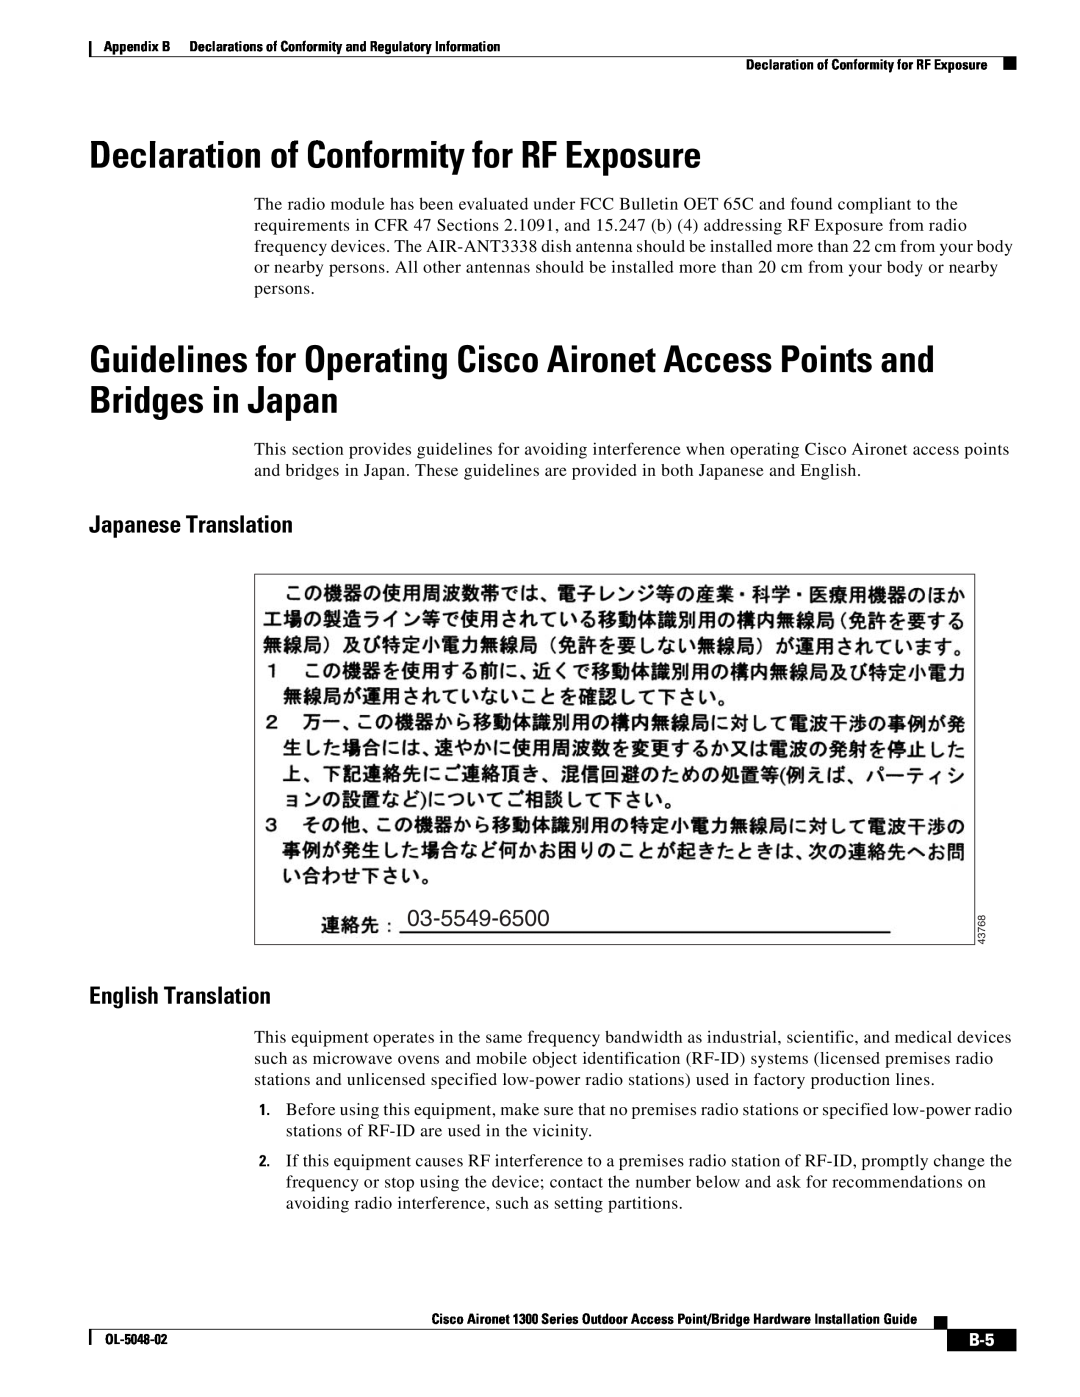 Cisco Systems 1300 Series manual Declaration of Conformity for RF Exposure, Japanese Translation, English Translation 